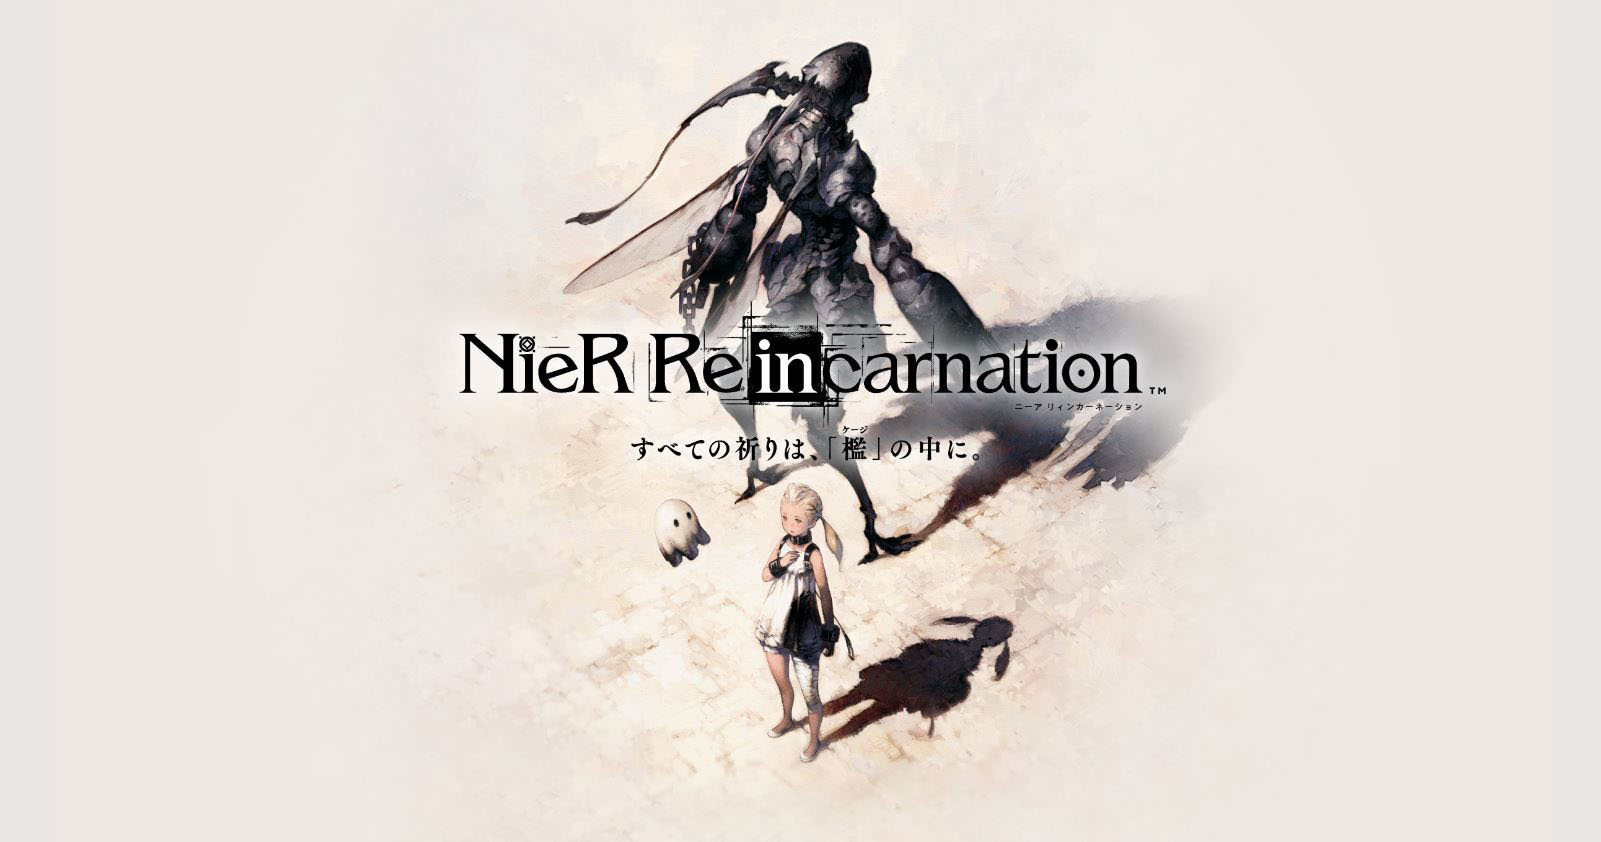 Nier Reincarnation 09 24 20 1